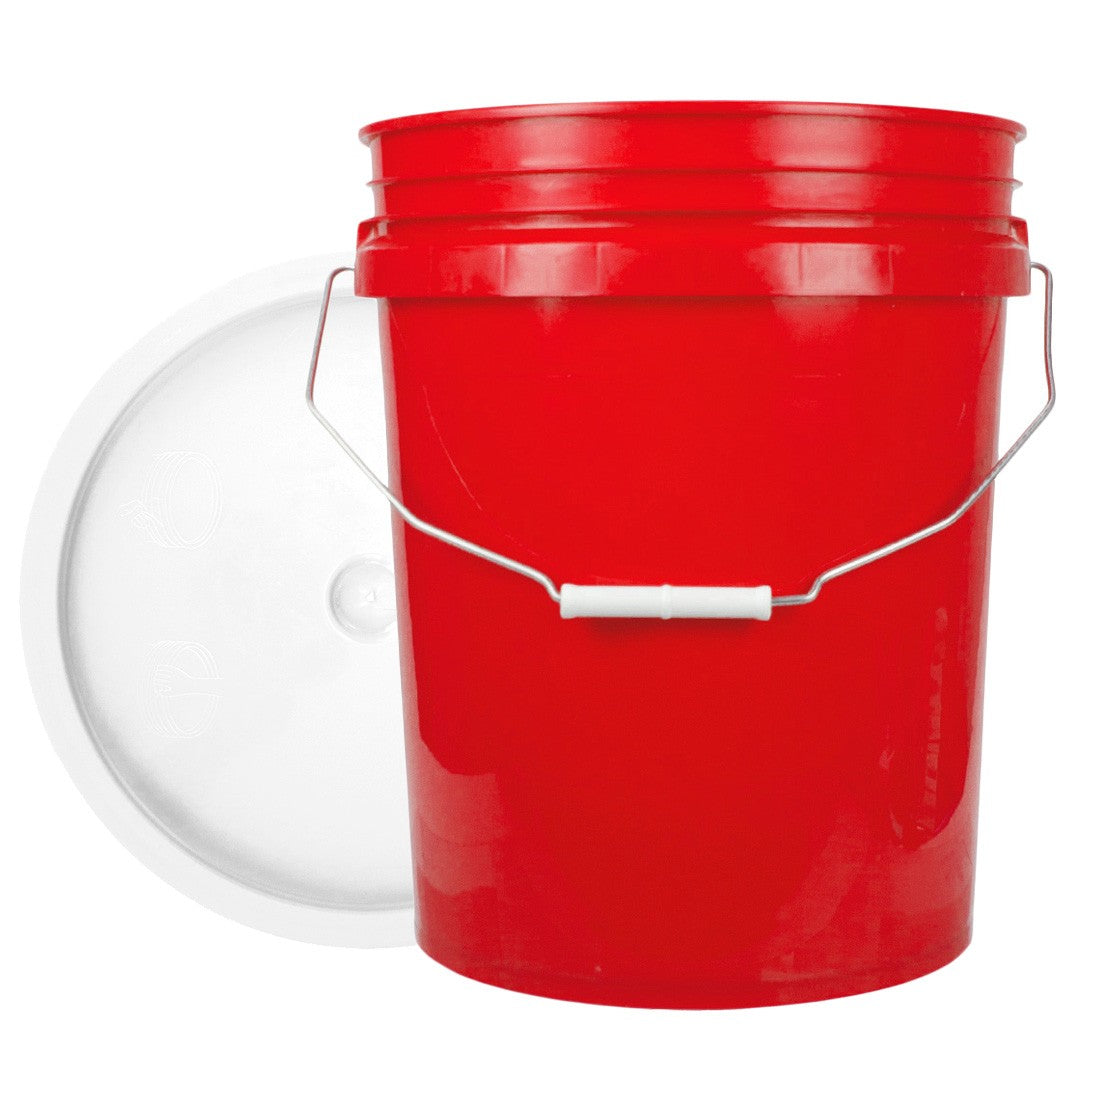 XERO Round Bucket Set Red Front View